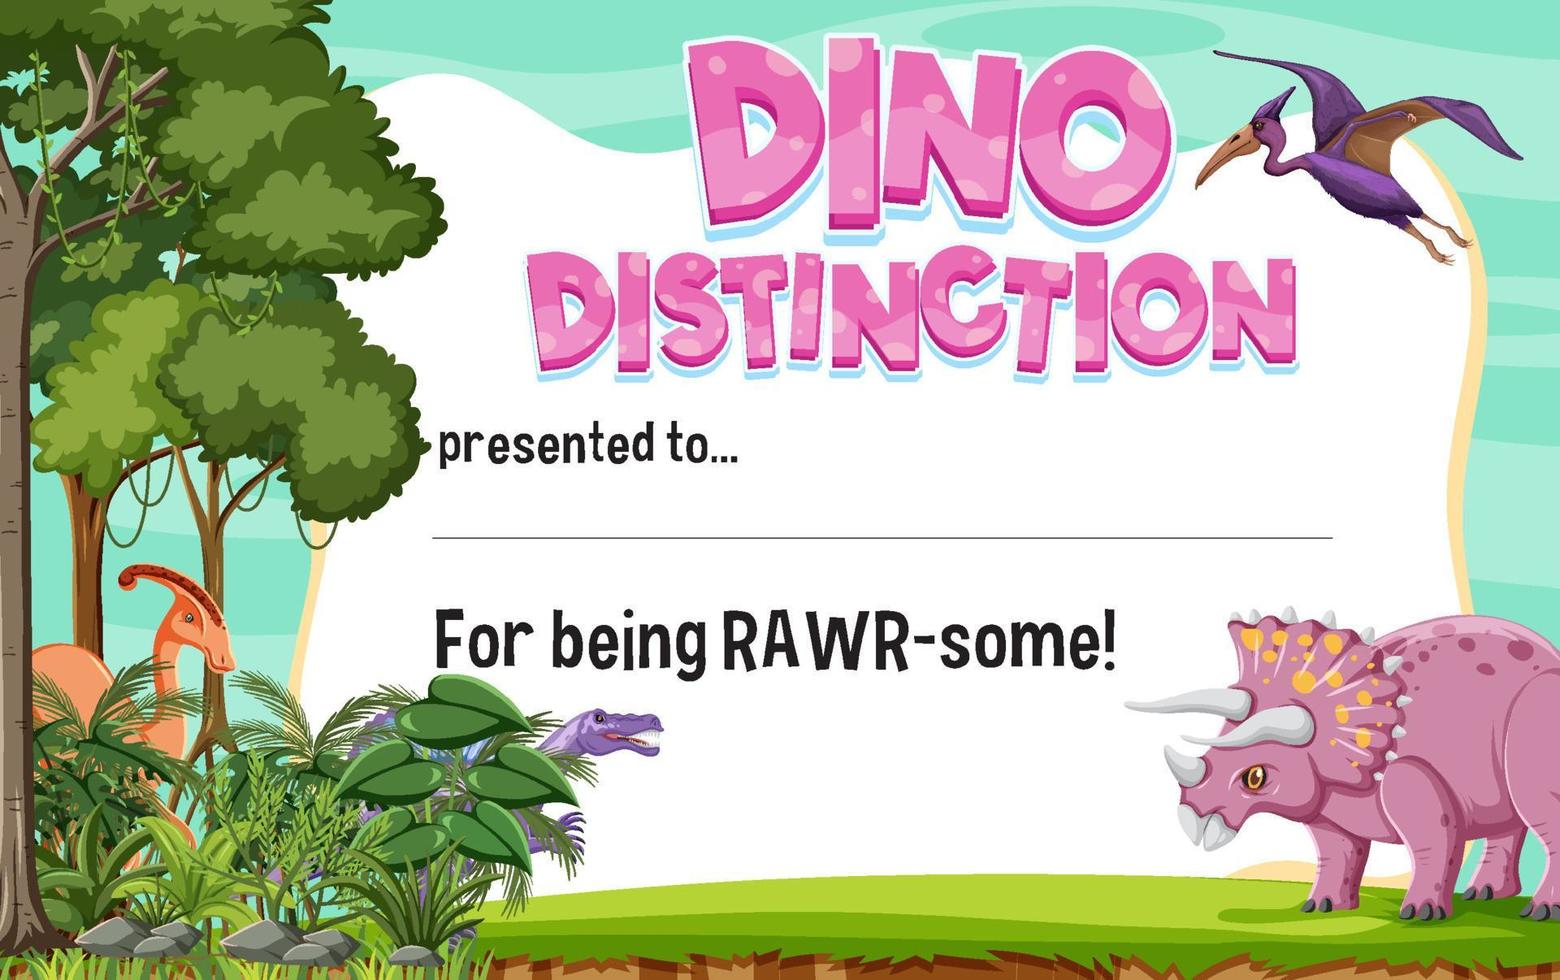 Dinosaur certificate template in cartoon style vector